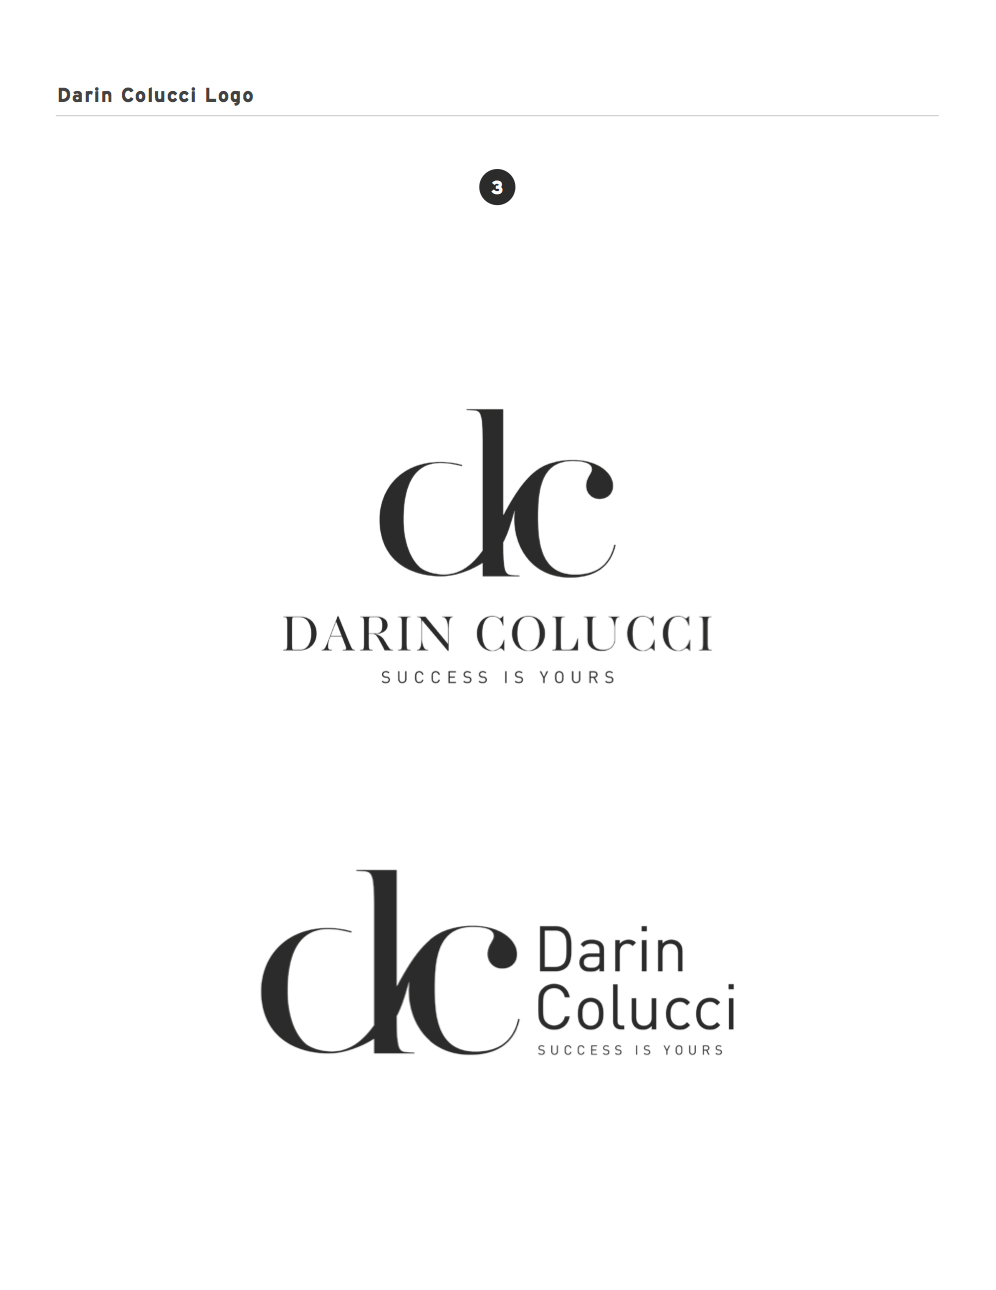 Darin Colucci Logo Options